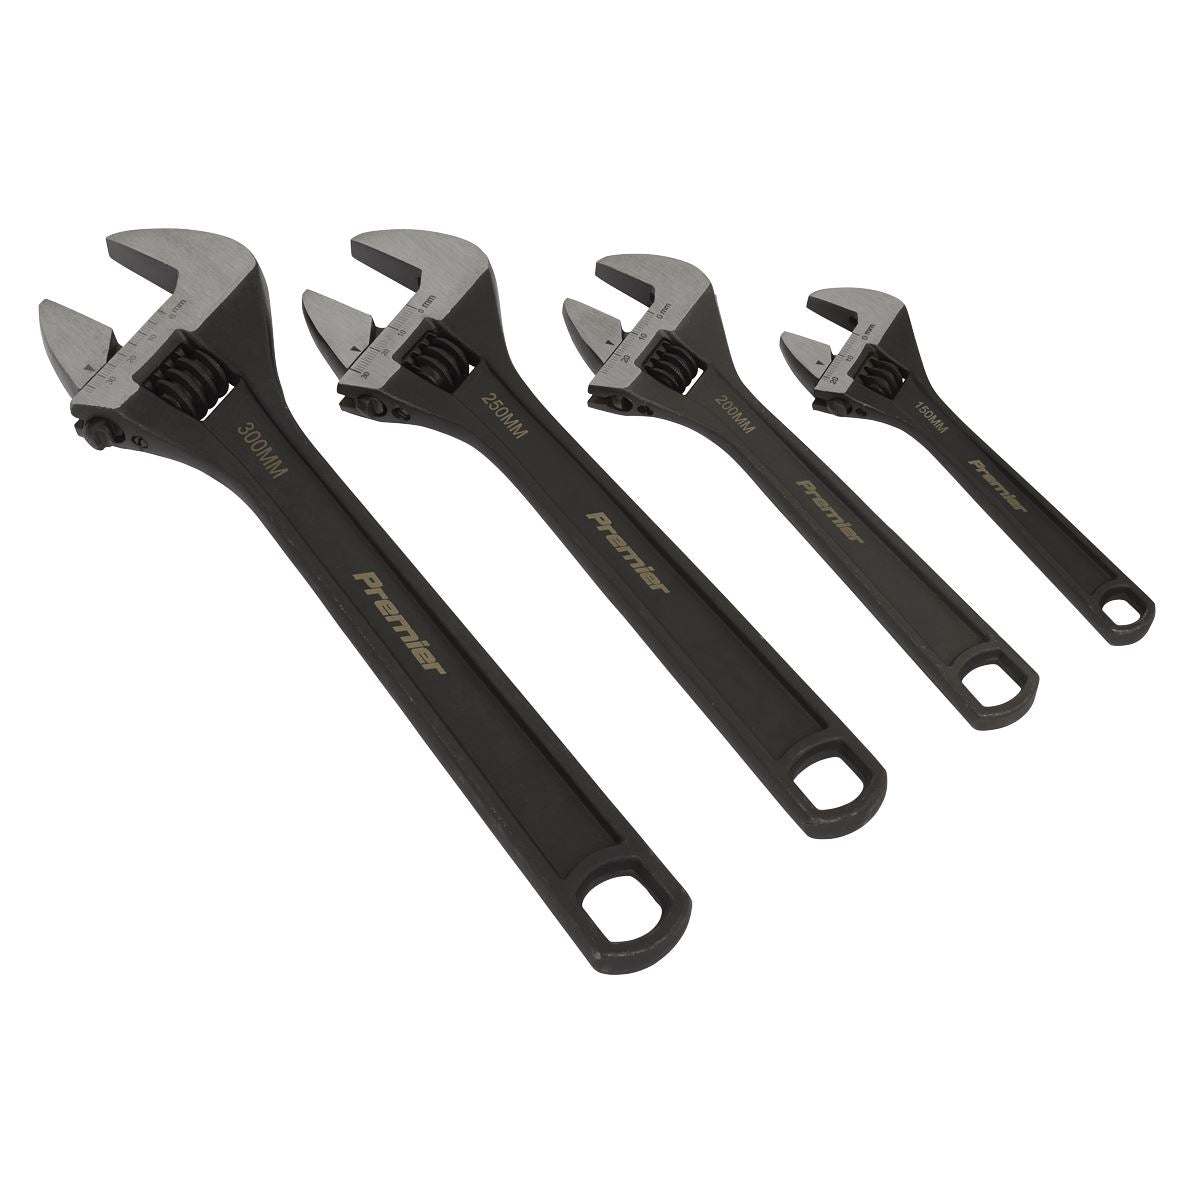 Sealey Premier Adjustable Wrench Set 4pc